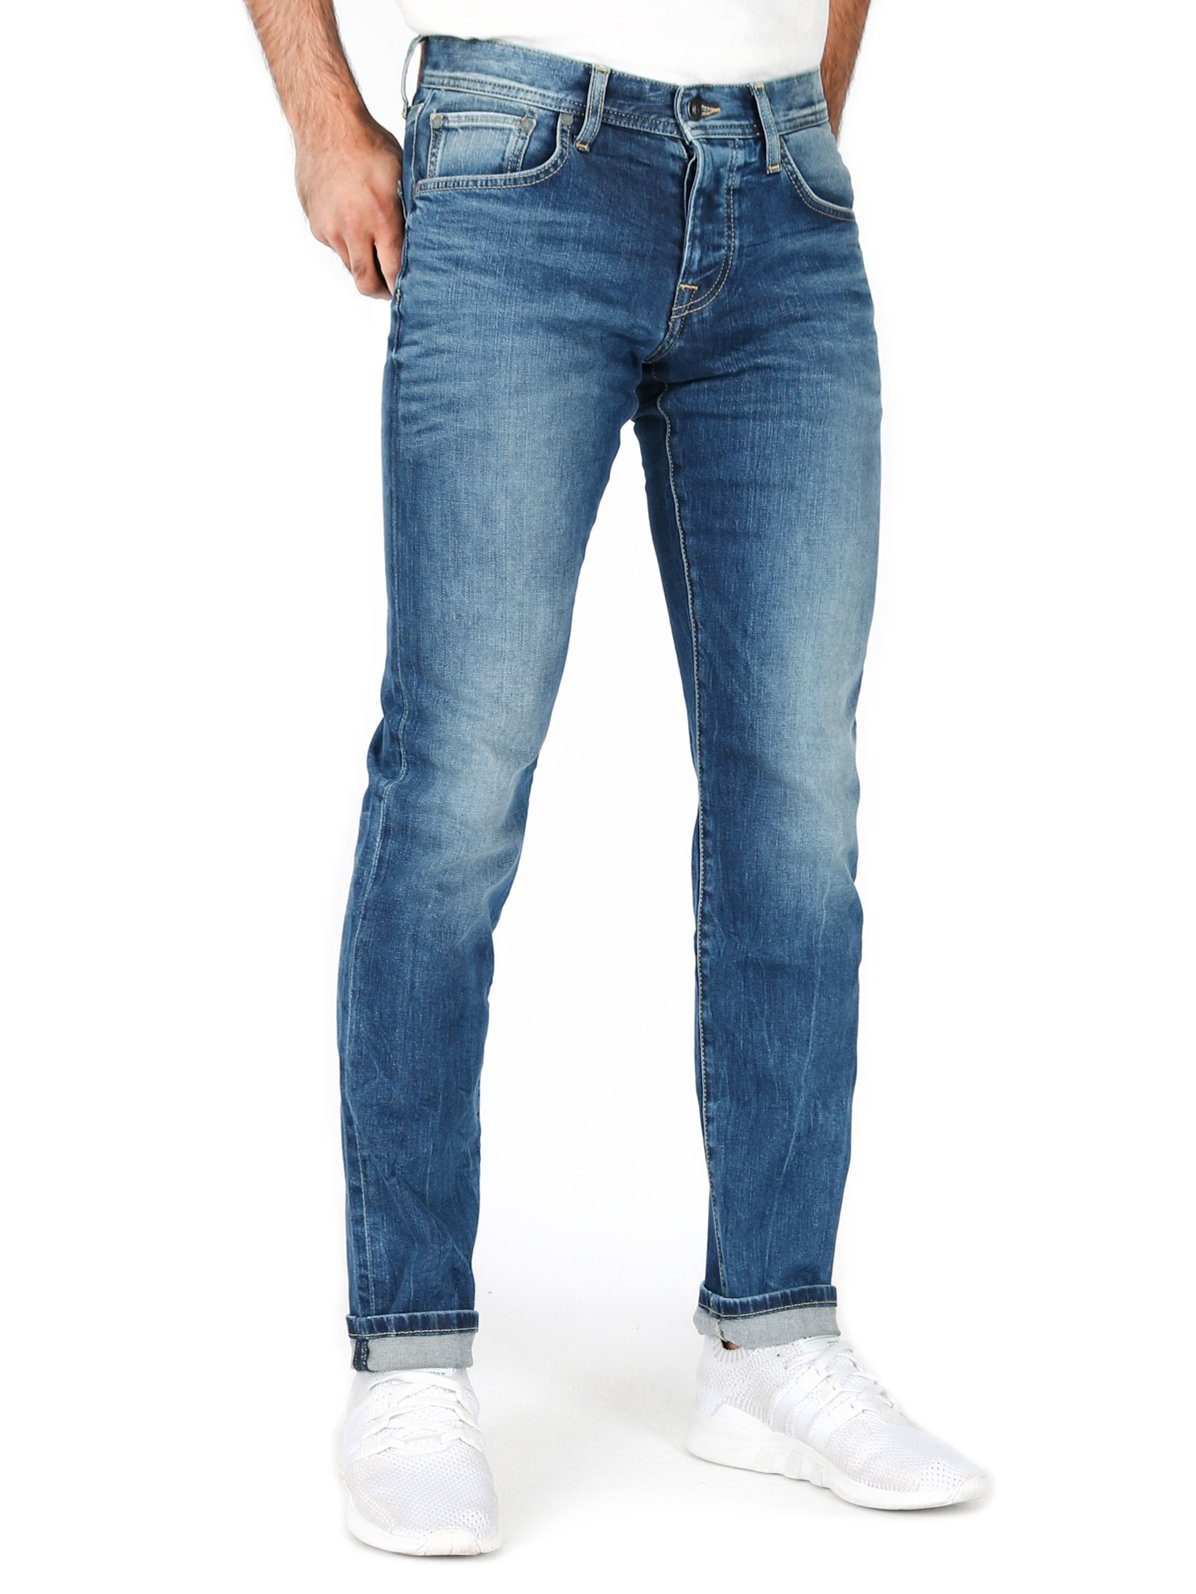 Pepe Jeans Herren-Jeans online kaufen | OTTO